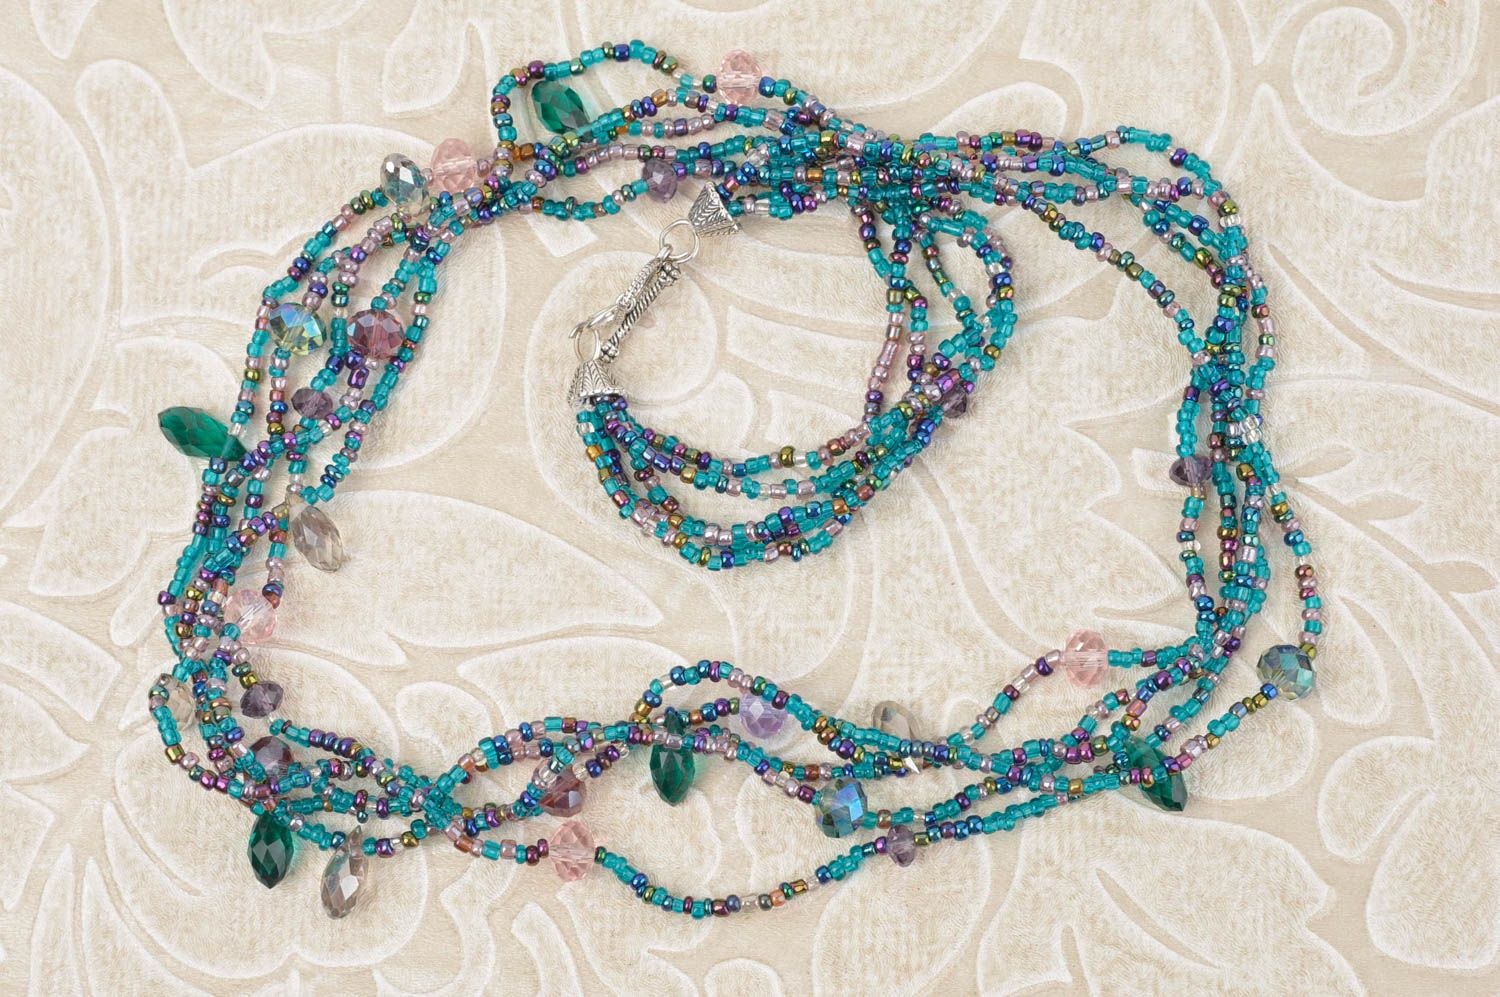 Handmade necklace designer accessory unusual jewelry gift ideas elite jewelry photo 1